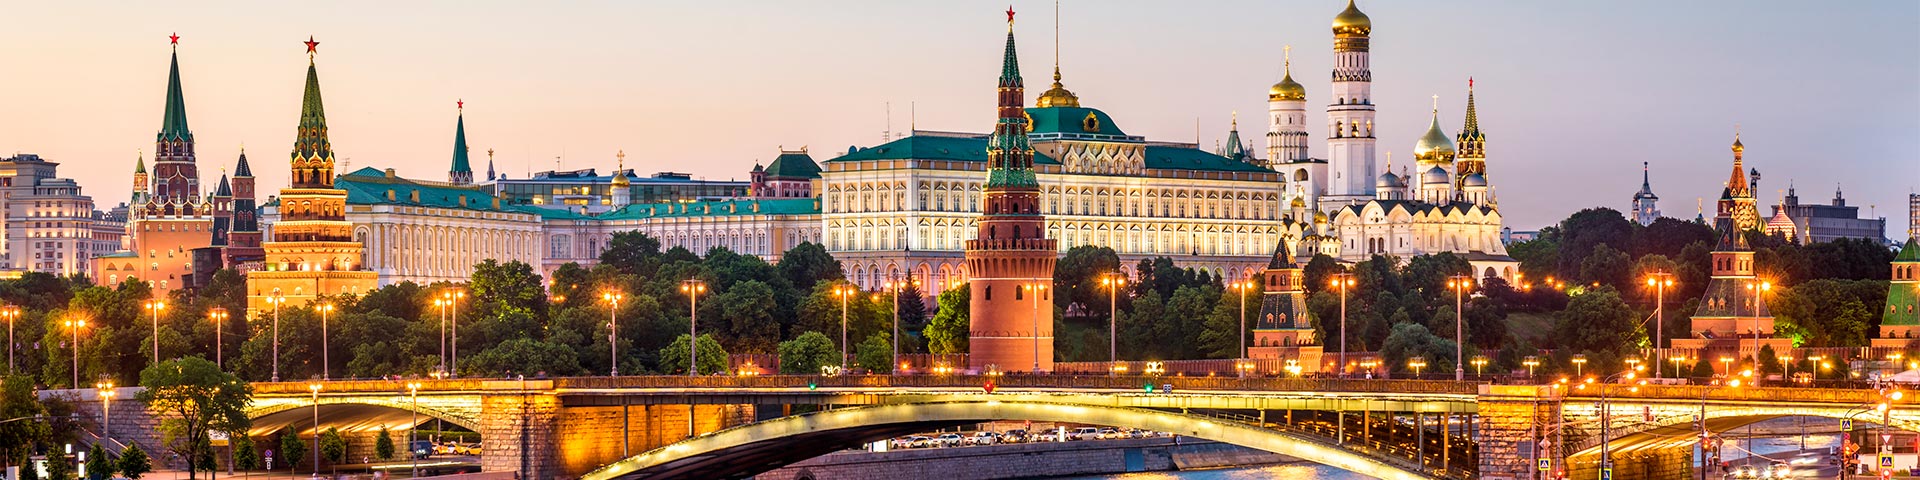 Russisch Übersetzung: Moskauer Kreml mit Bolschoy-Kamenny-Brücke am Abend, Russland.